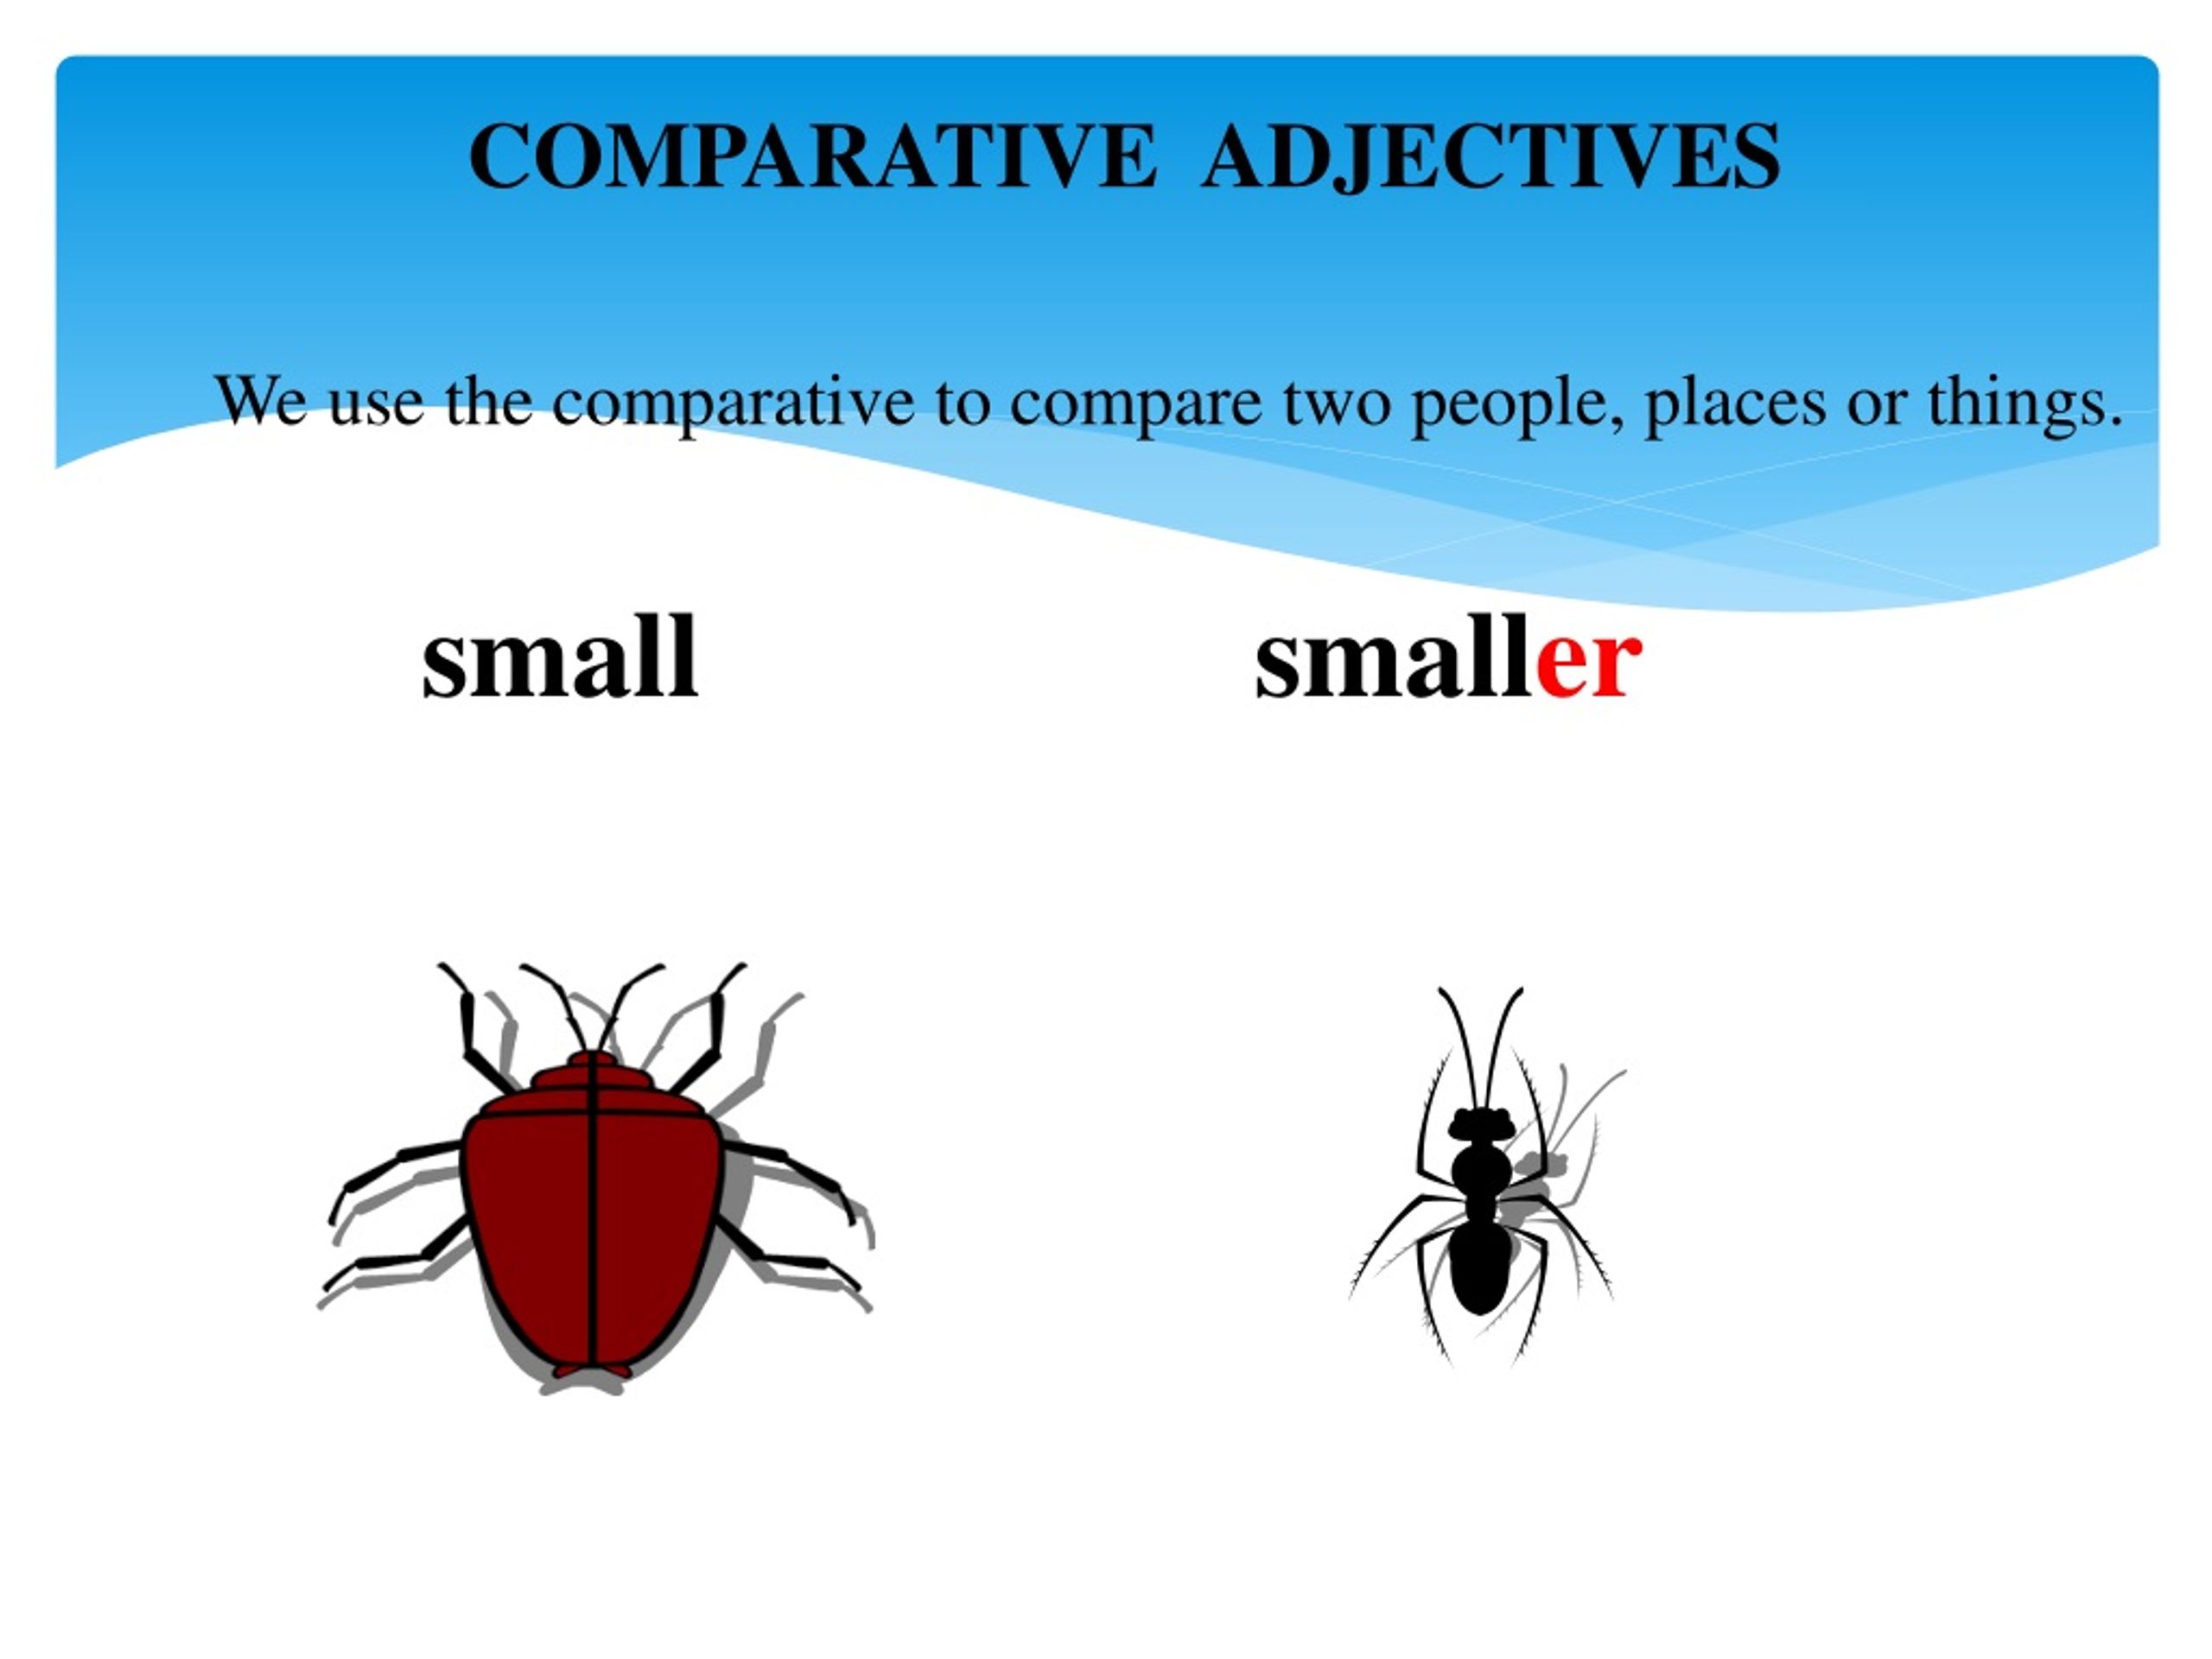 Comparative adjectives dangerous. Comparative adjectives pictures. Comparative adjectives 2 people. Lecture adjective. Discipline adjective.